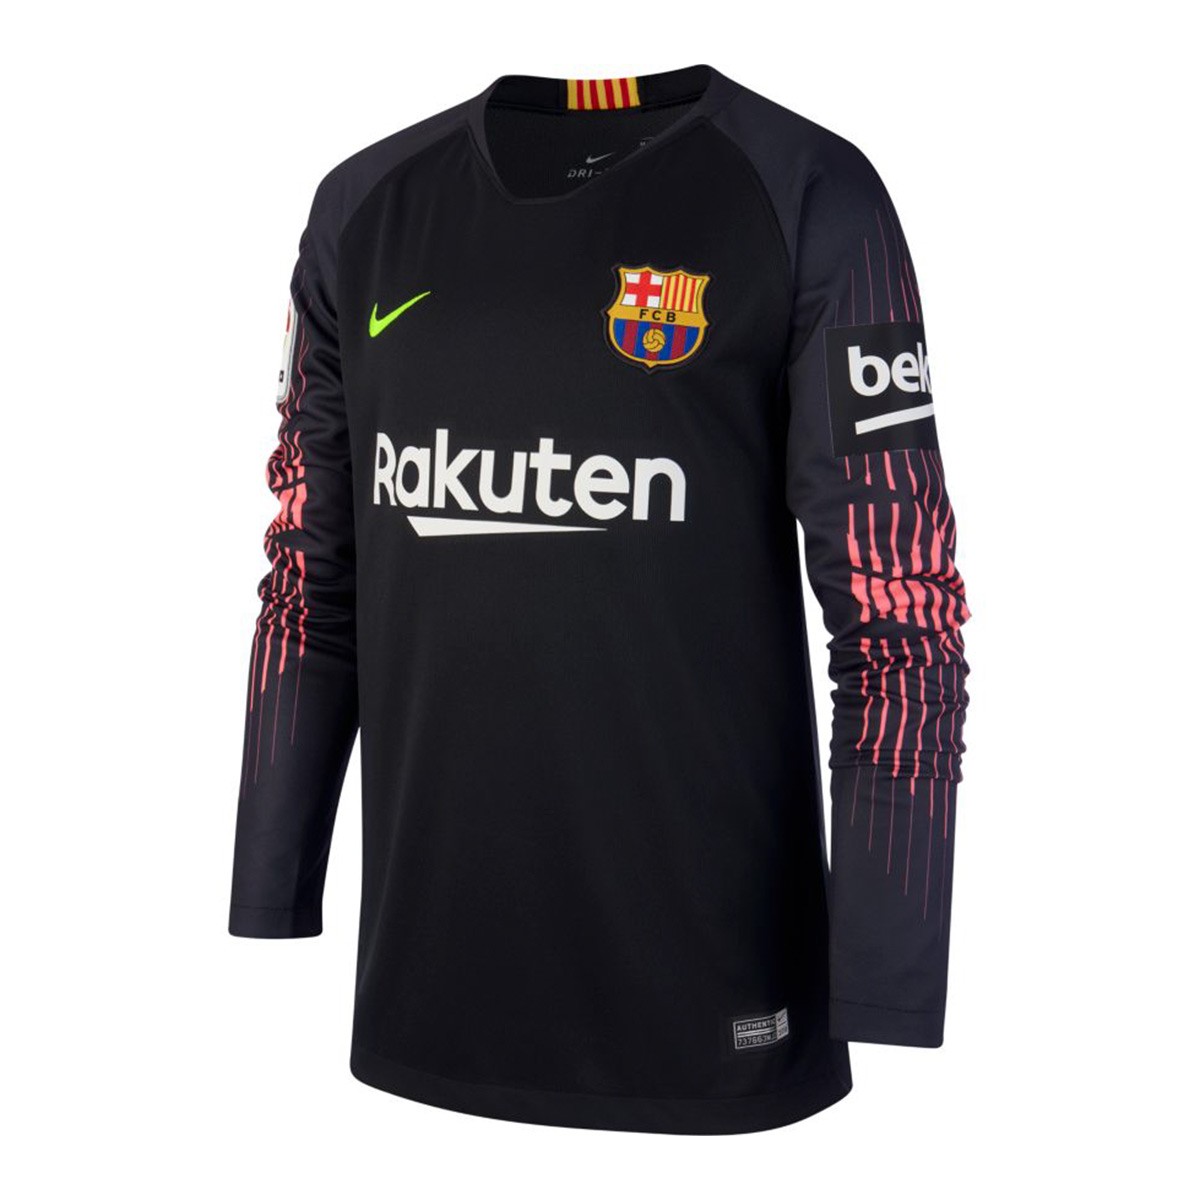 Jersey Nike Kids Goalkeeper FC Barcelona Stadium 2018-2019 Black-Volt ...